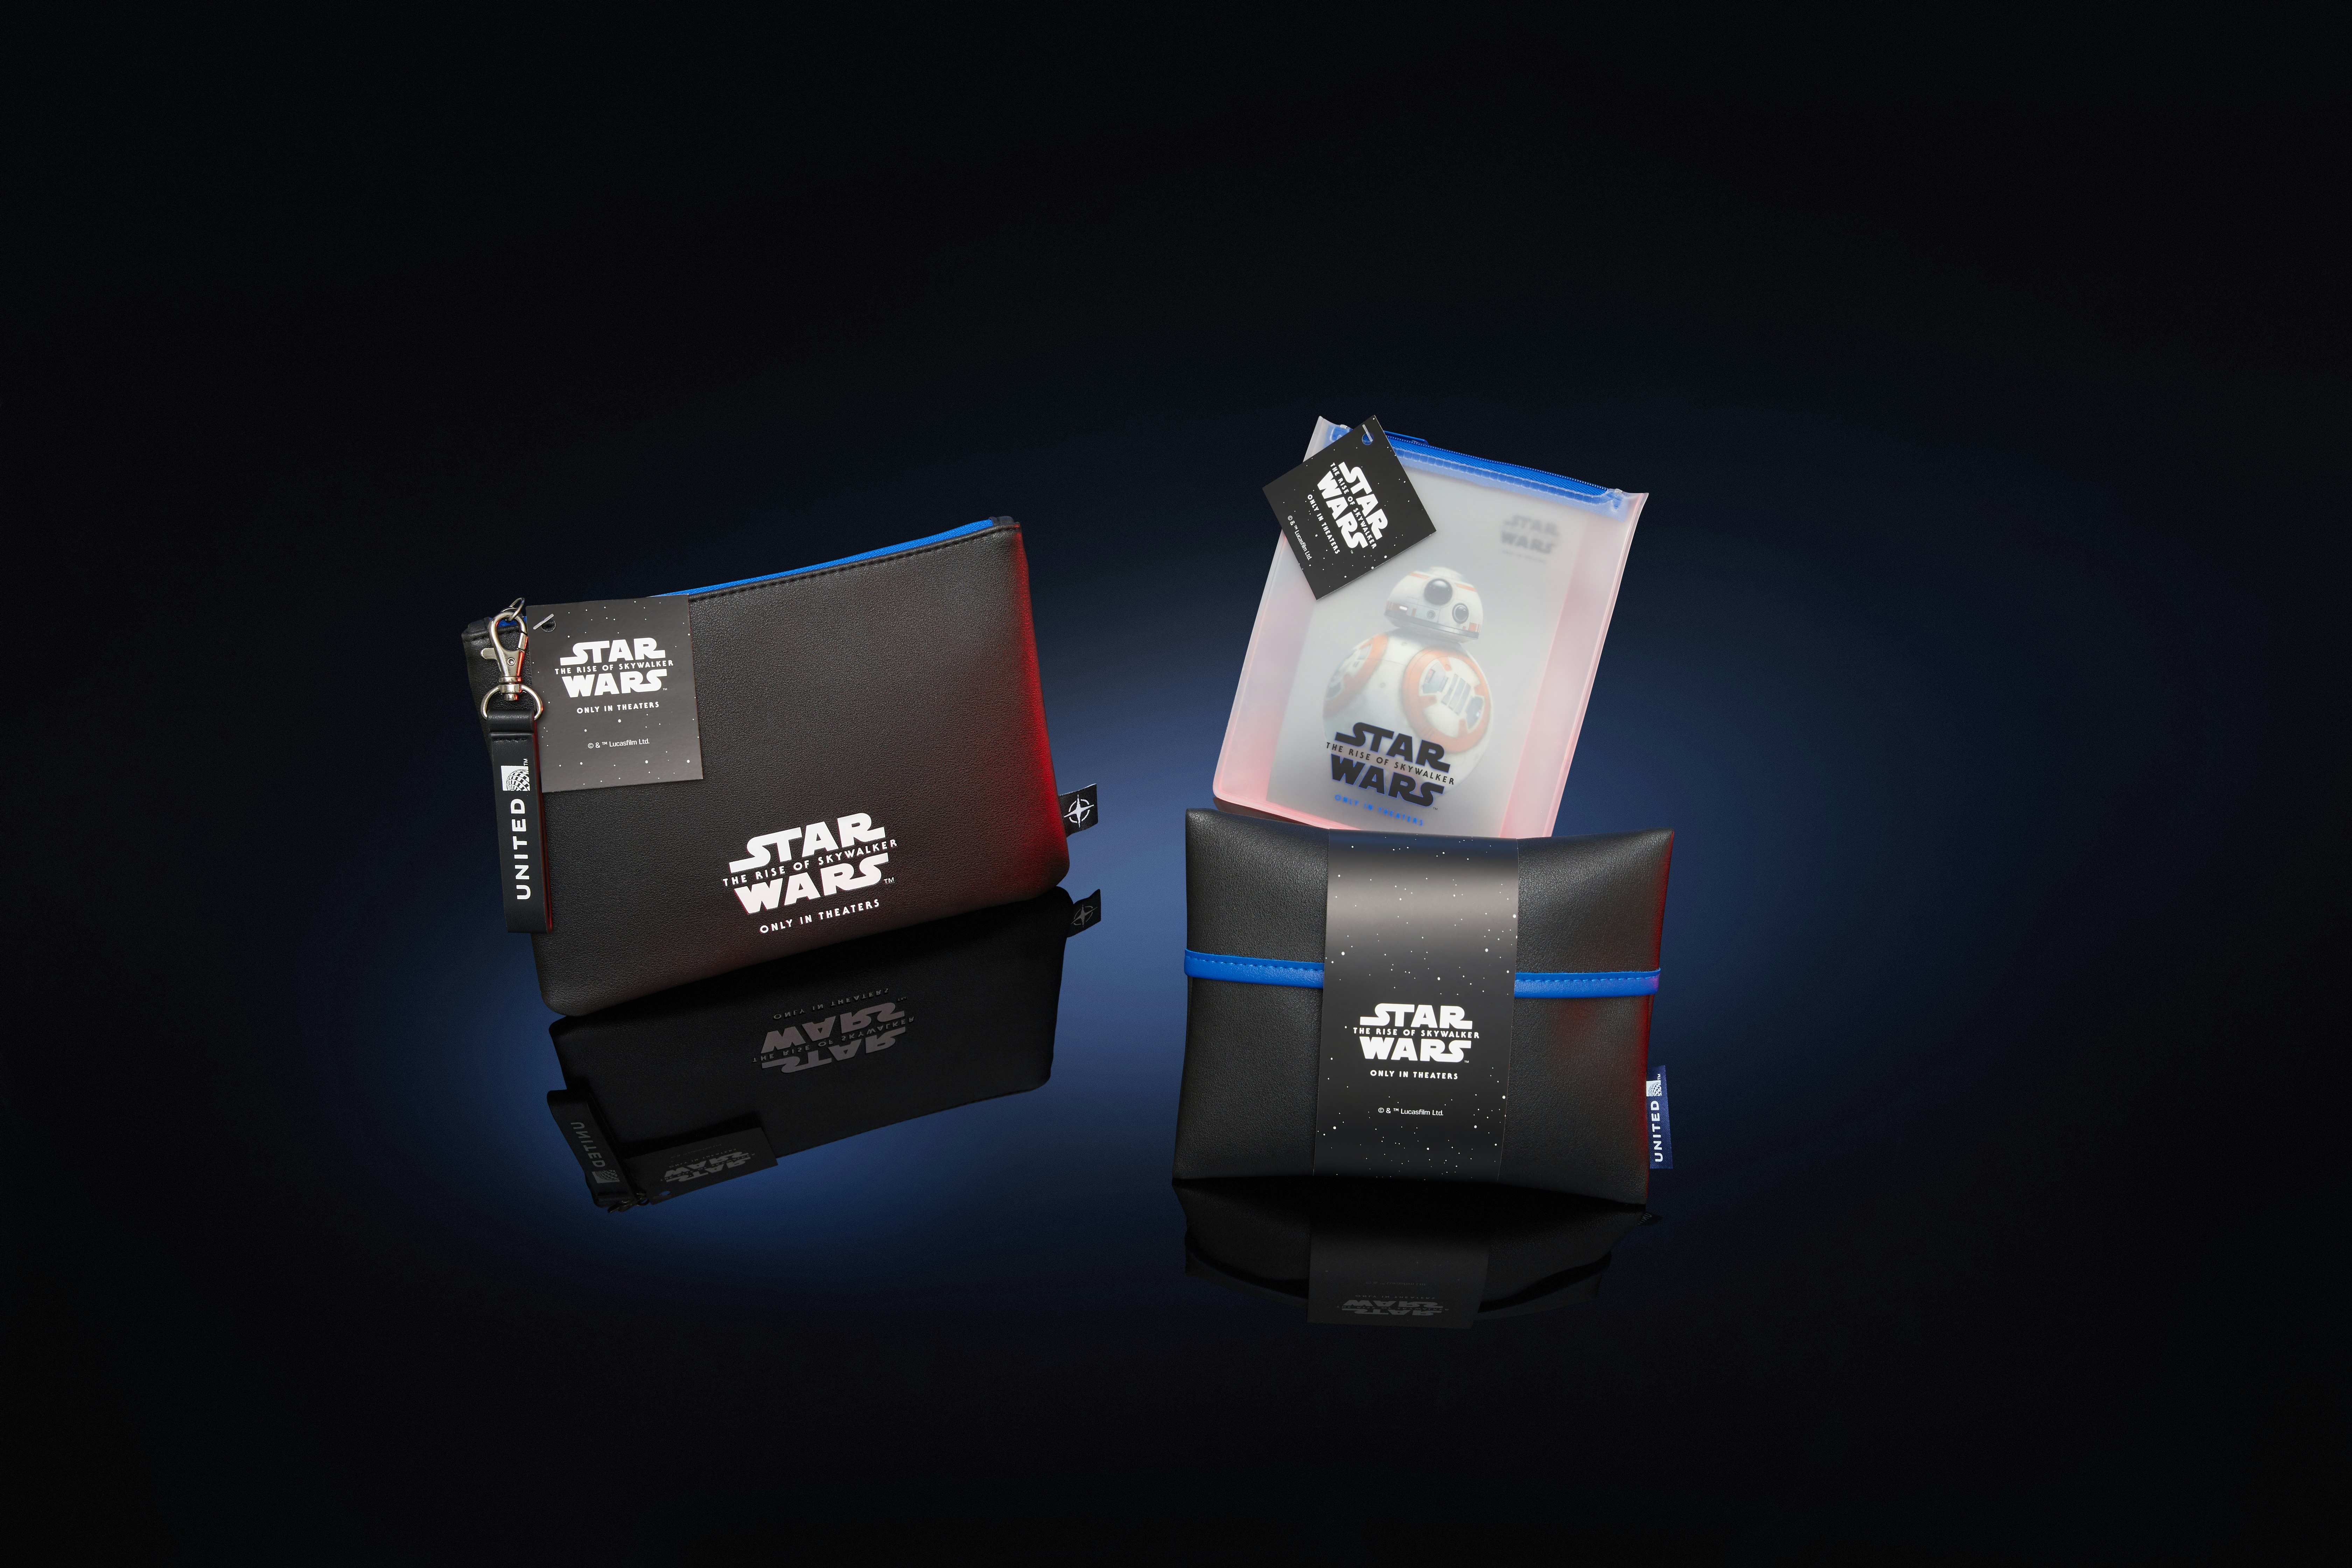 Three zipped amenity kits featuring Star Wars-themed design